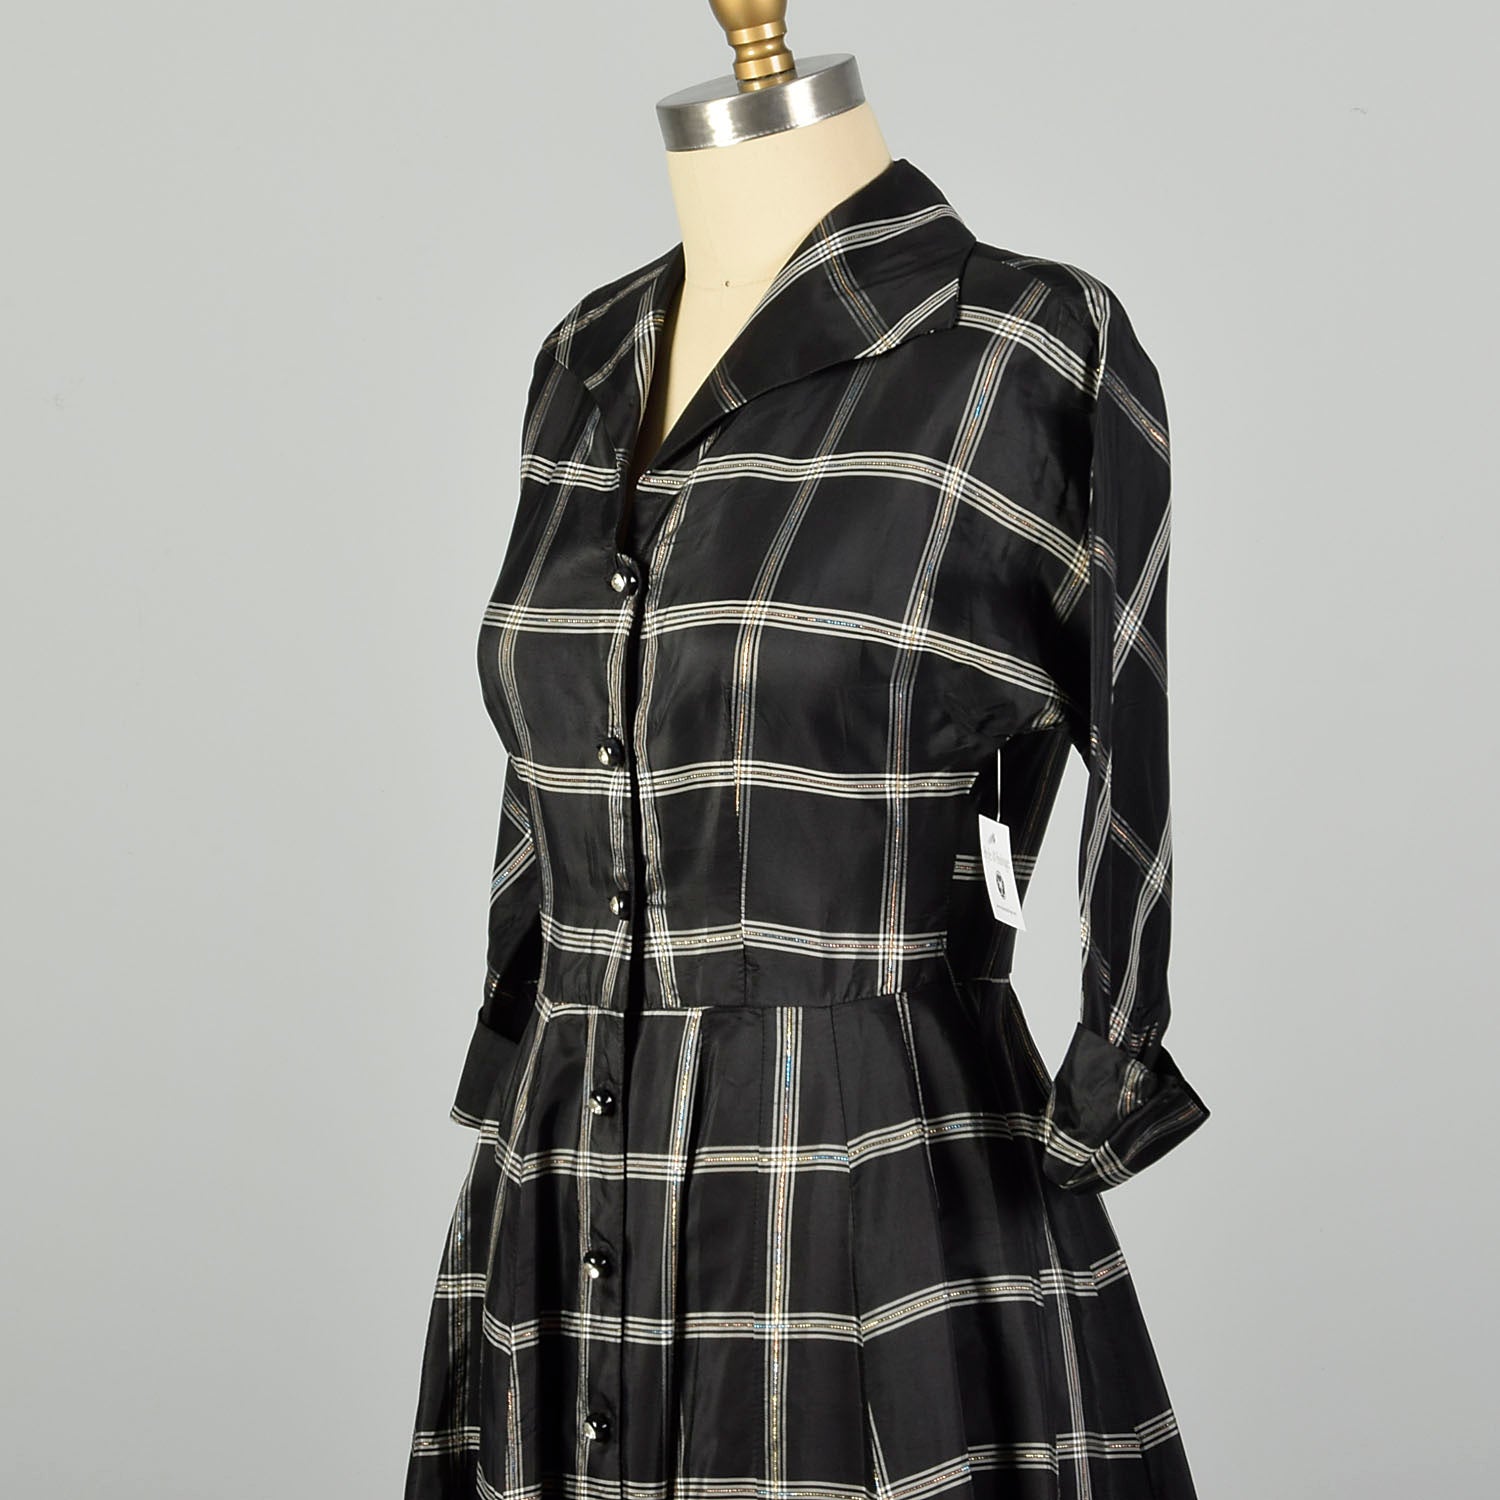 Medium 1950s Dress Black Taffeta Hourglass Plaid Cocktail Party Dress